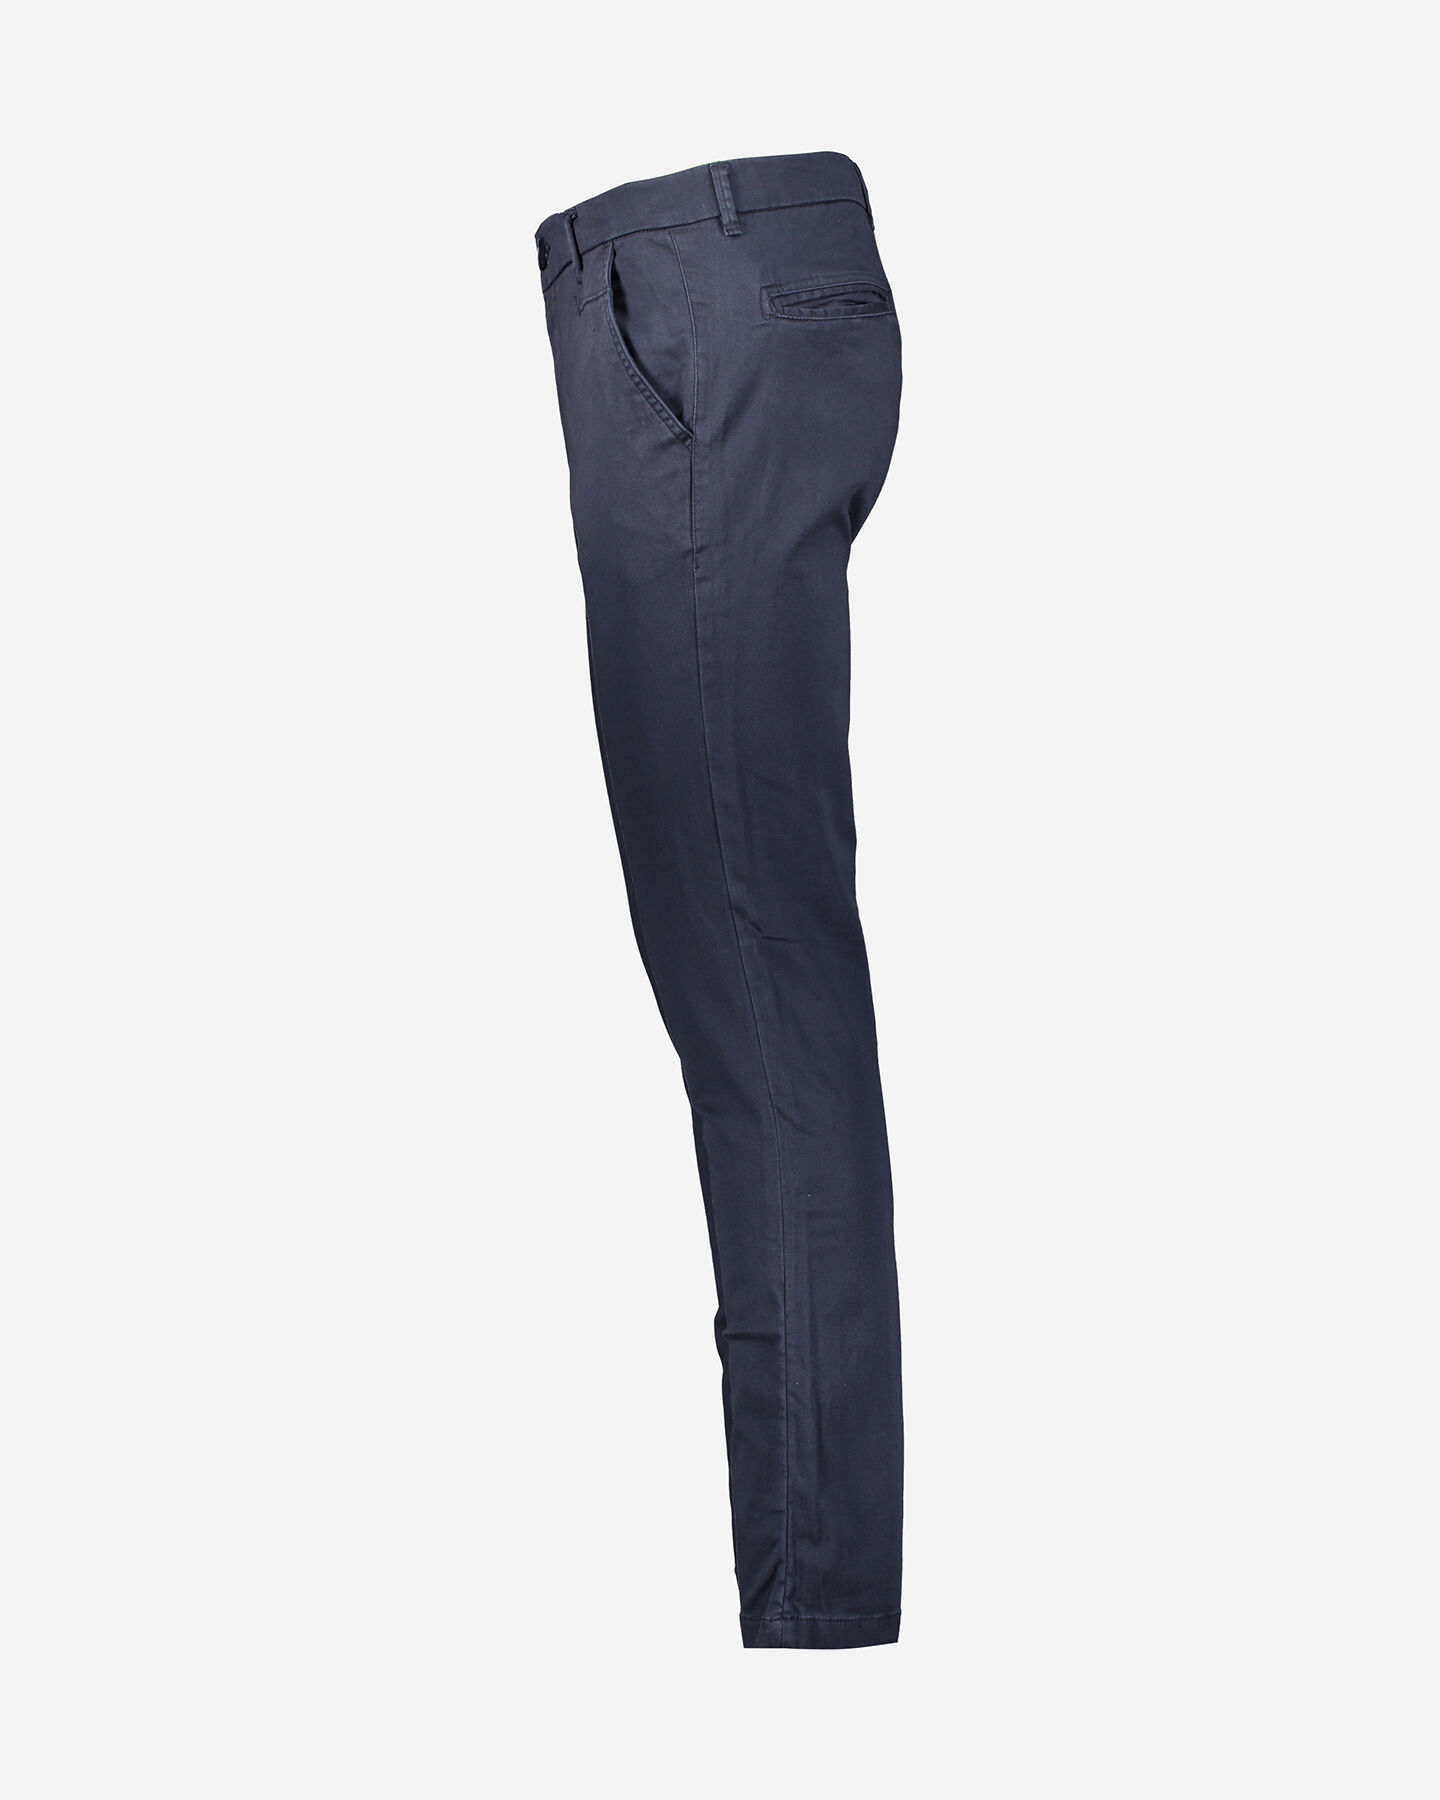  Pantalone DACK'S CHINO M S4079606|935|44 scatto 1